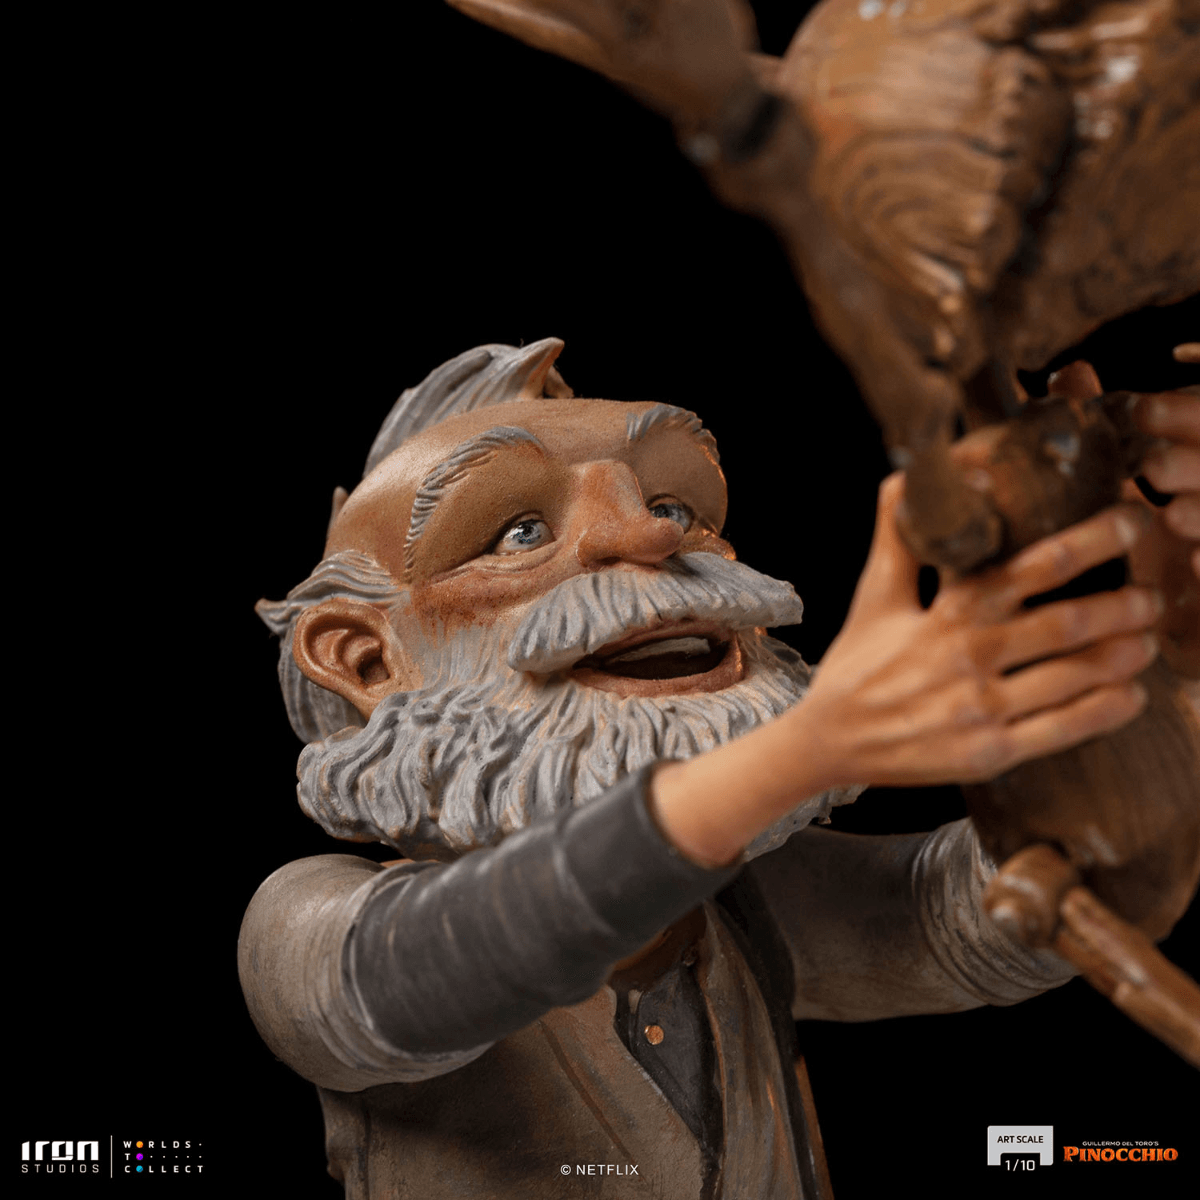 IRO53110 Pinocchio - Gepeto & Pinocchio 1:10 Statue - Iron Studios - Titan Pop Culture